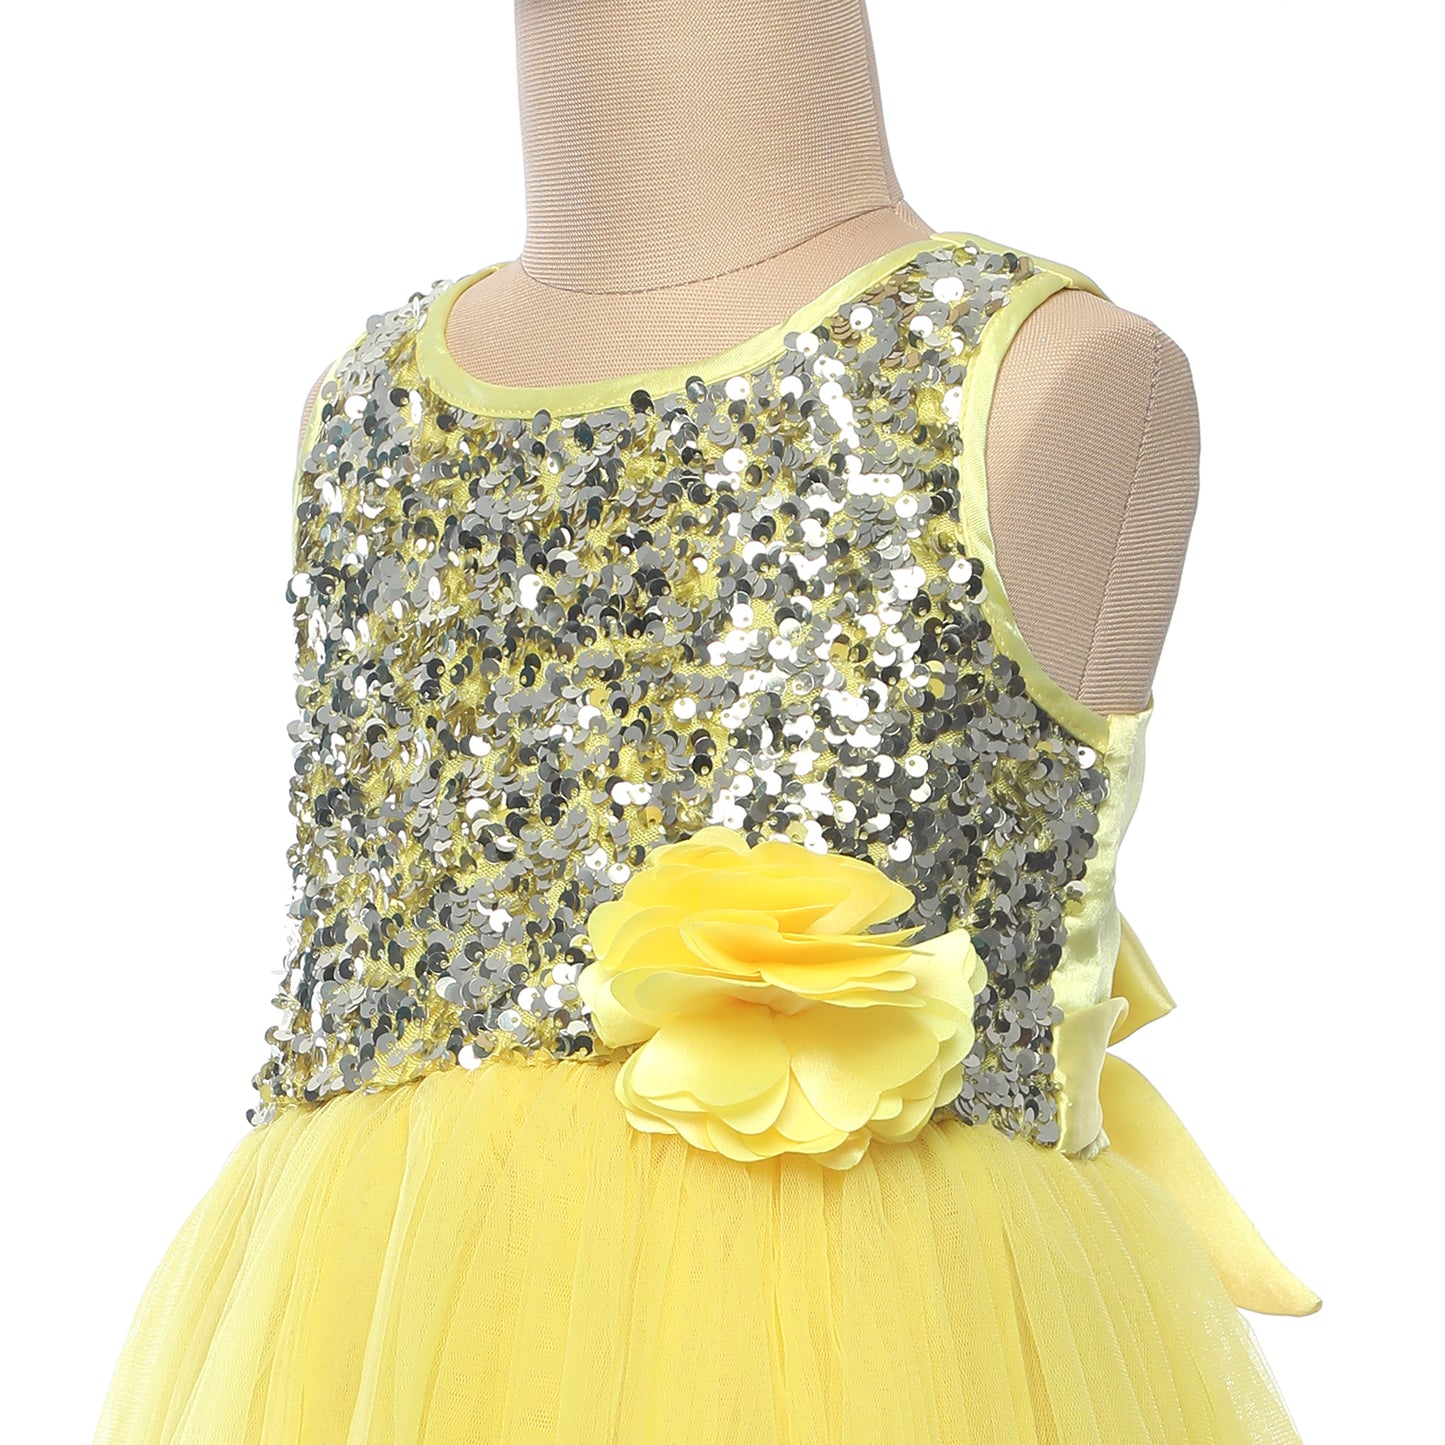 Yellow Full length Gown - Weddings Flower Girls , Birthdays , Summer Photoshoots